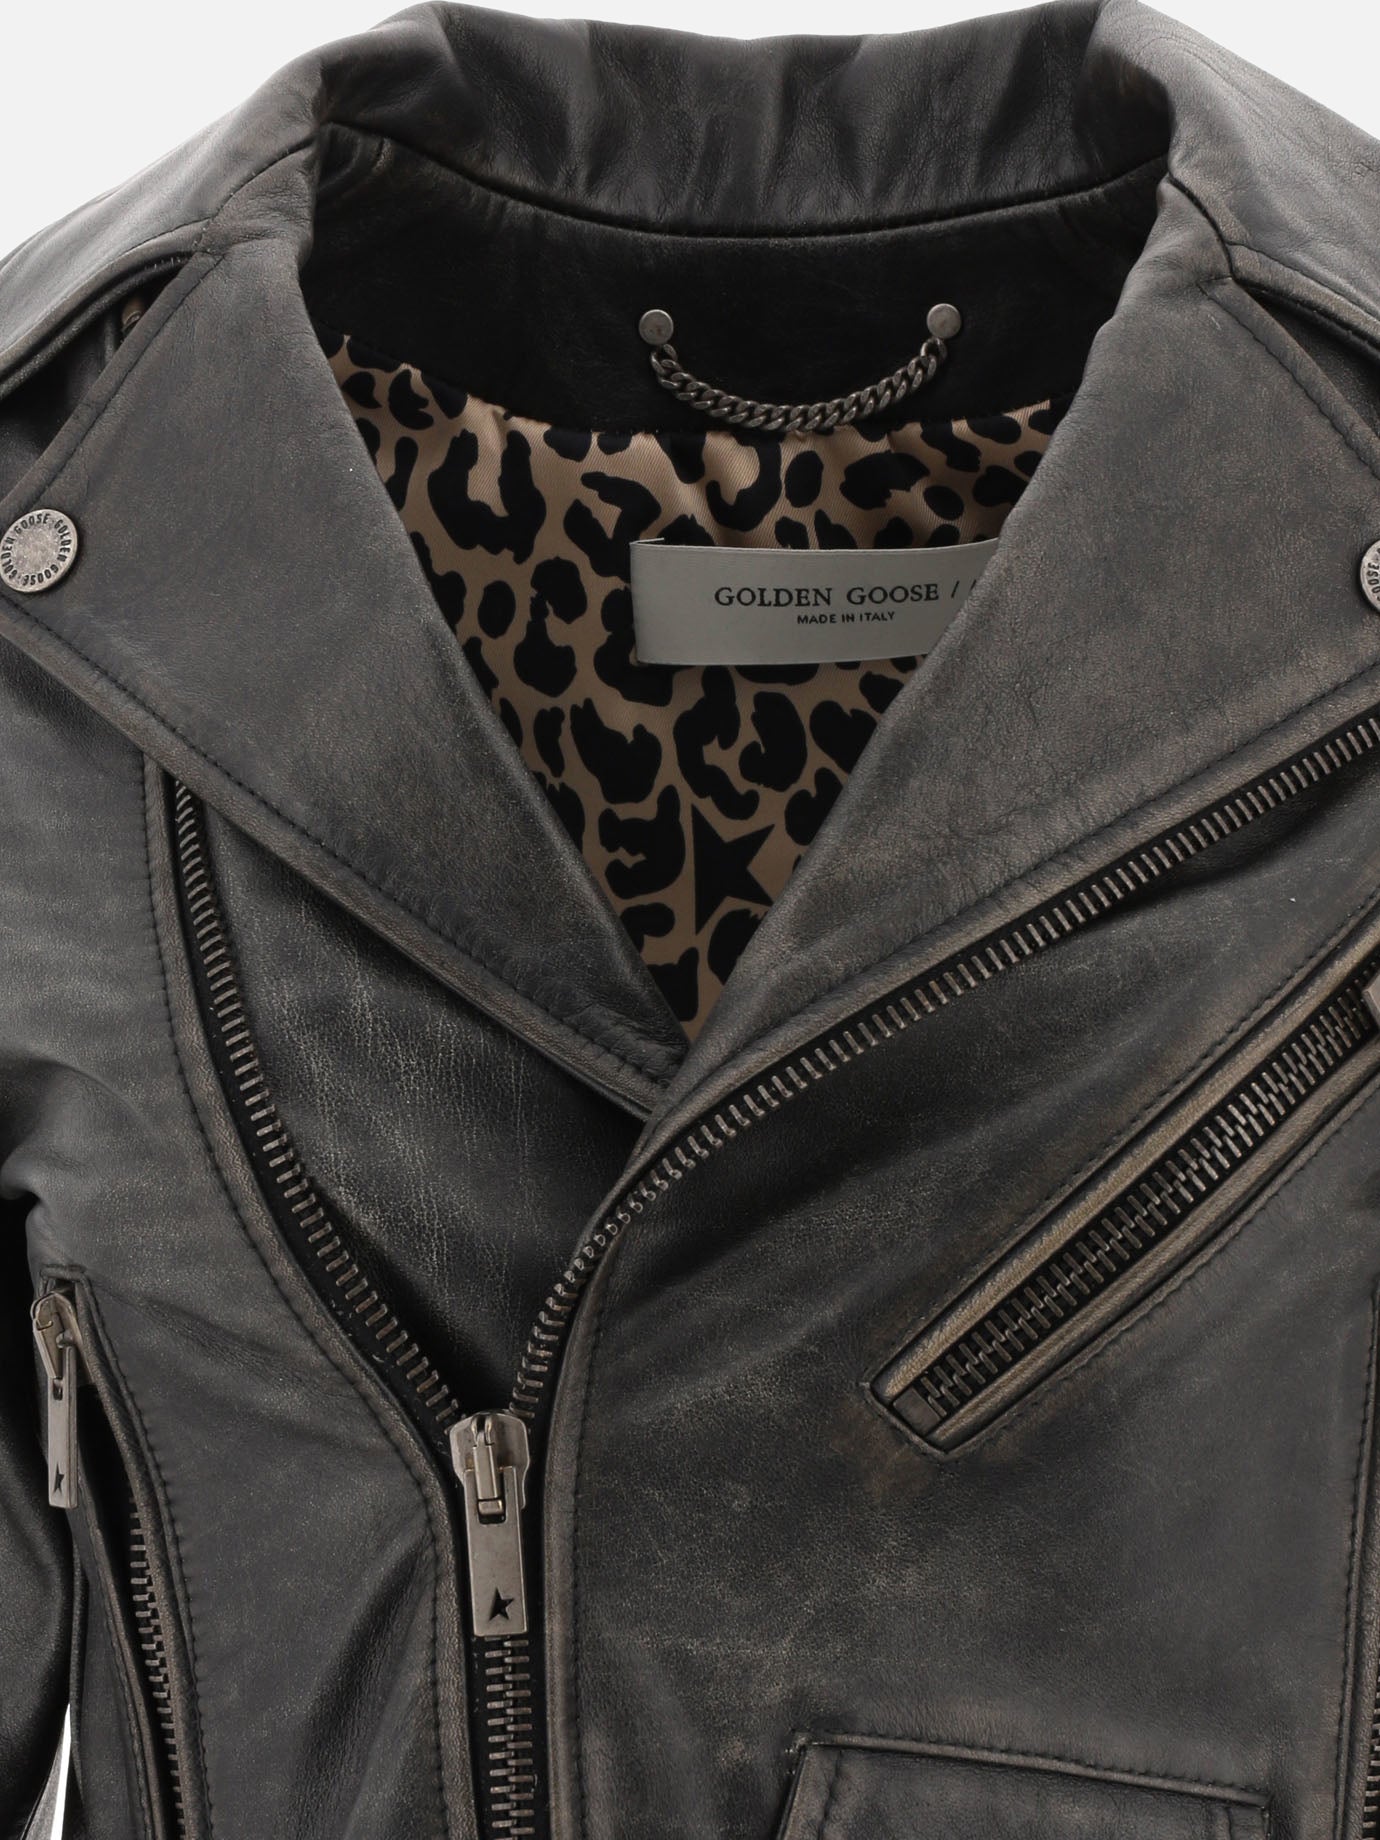 "Destiny" leather jacket